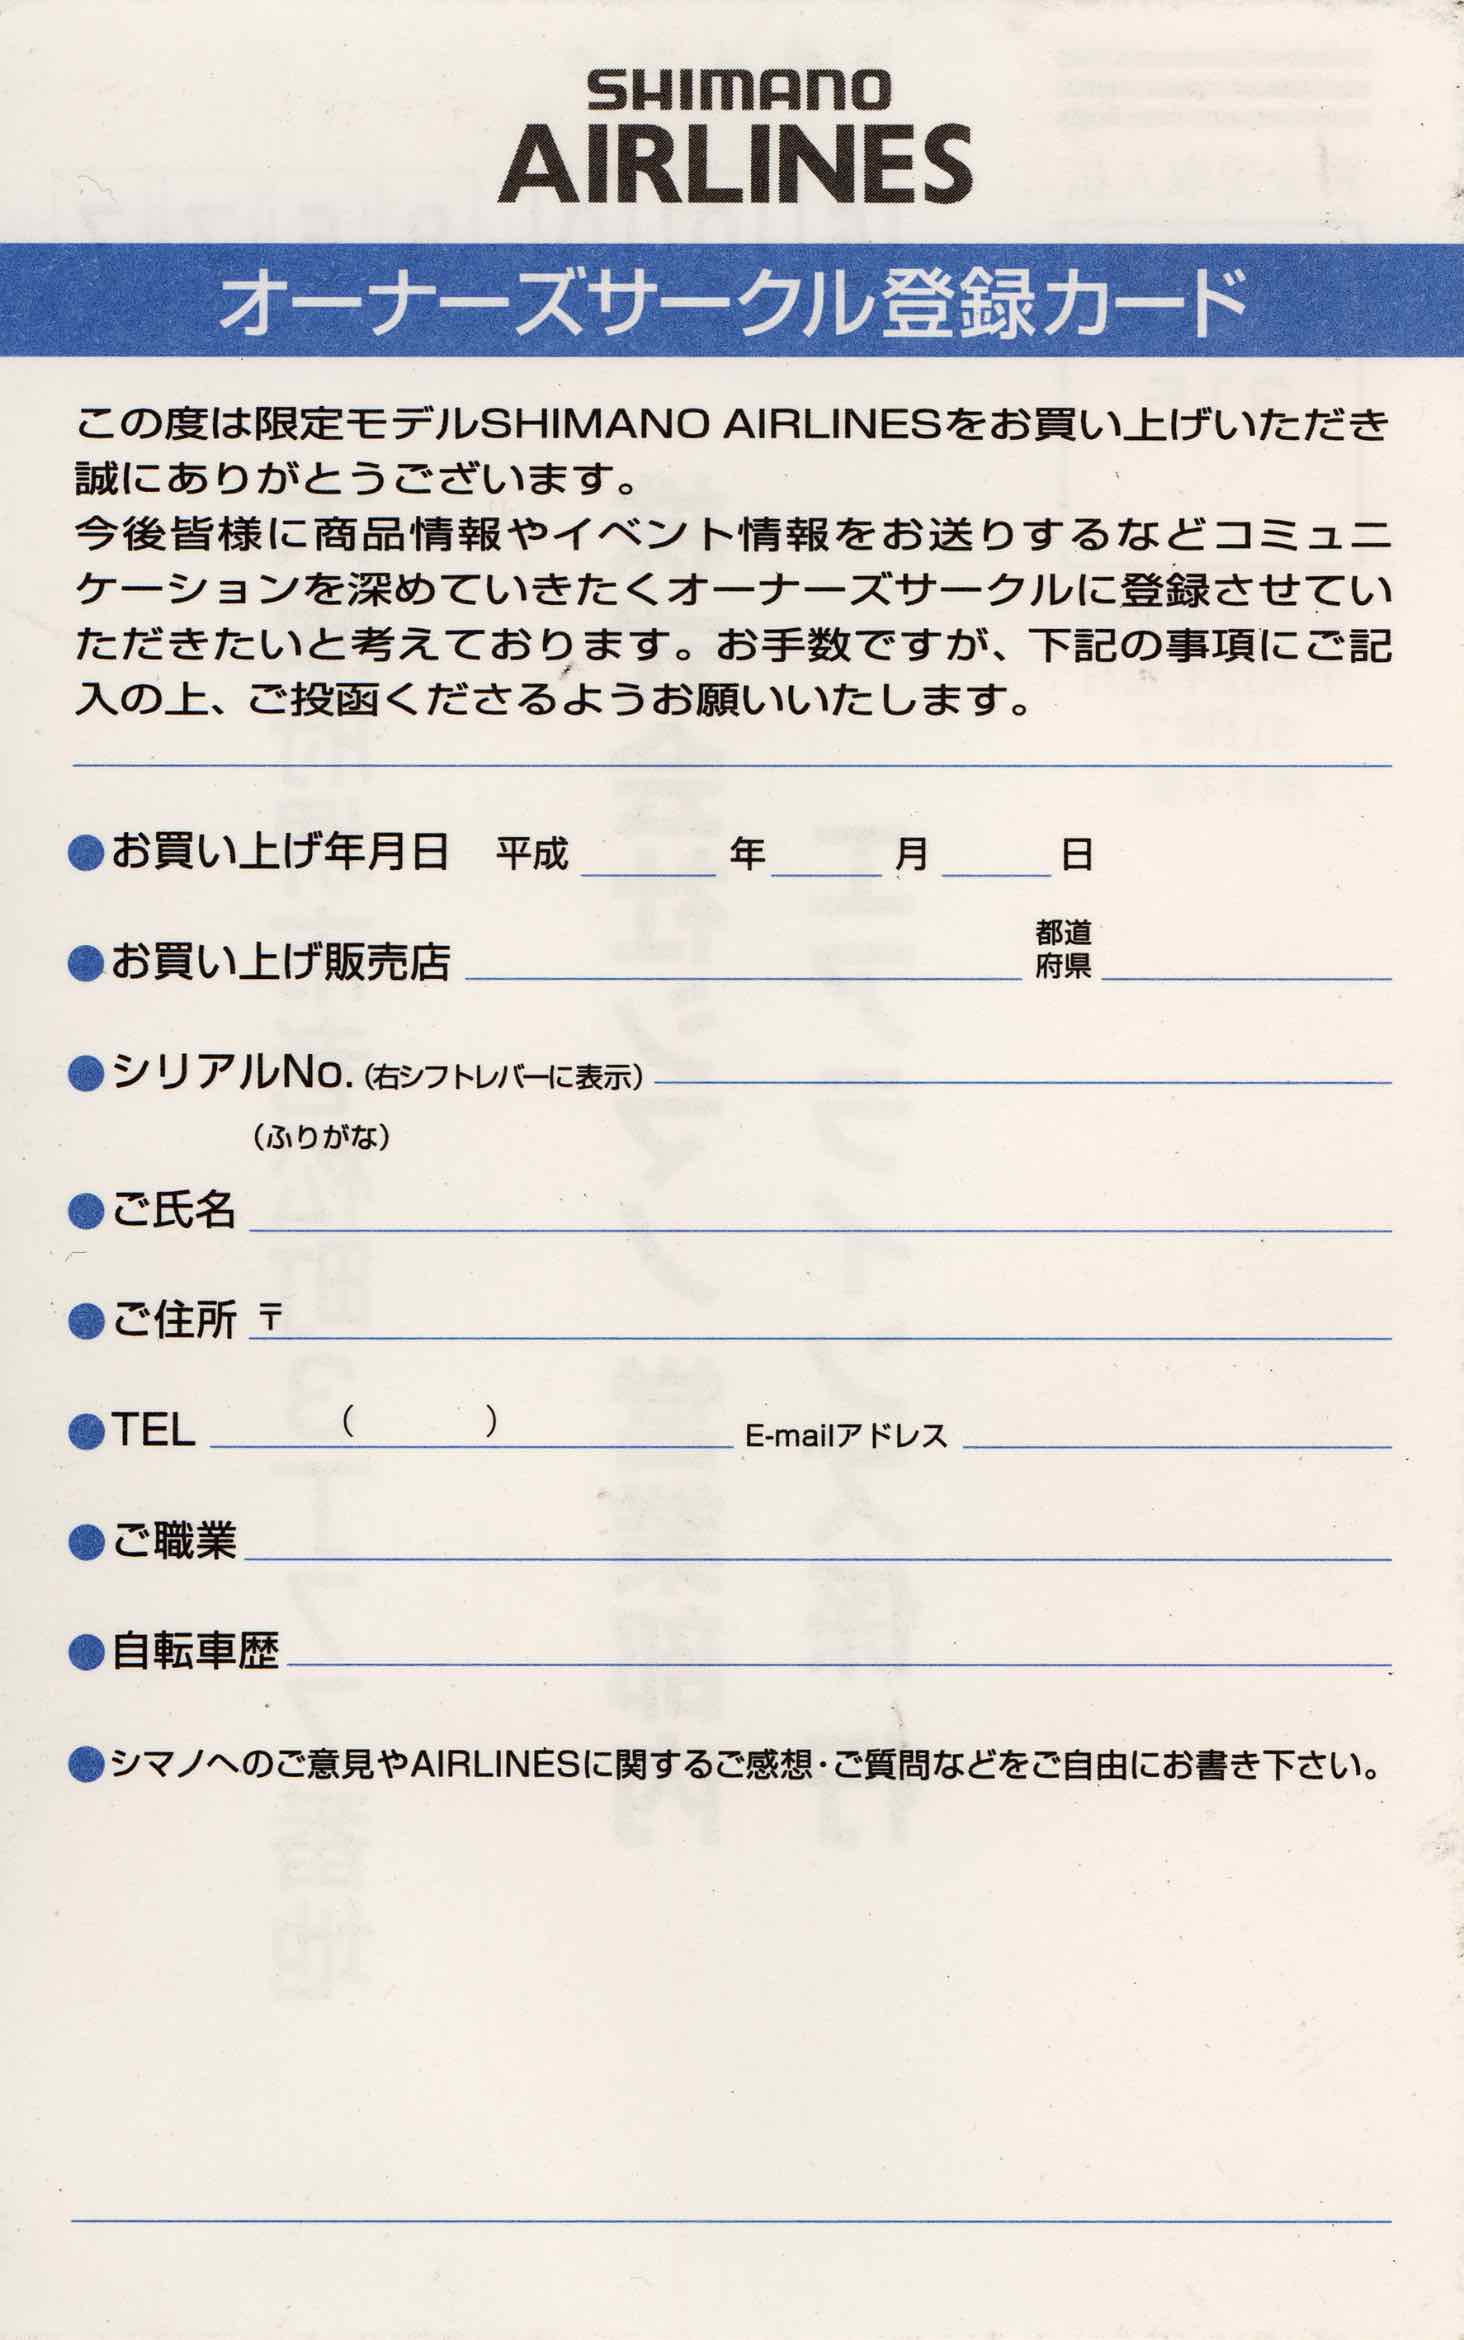 Shimano Airlines derailleur (AR01) - registration card scan 1 main image